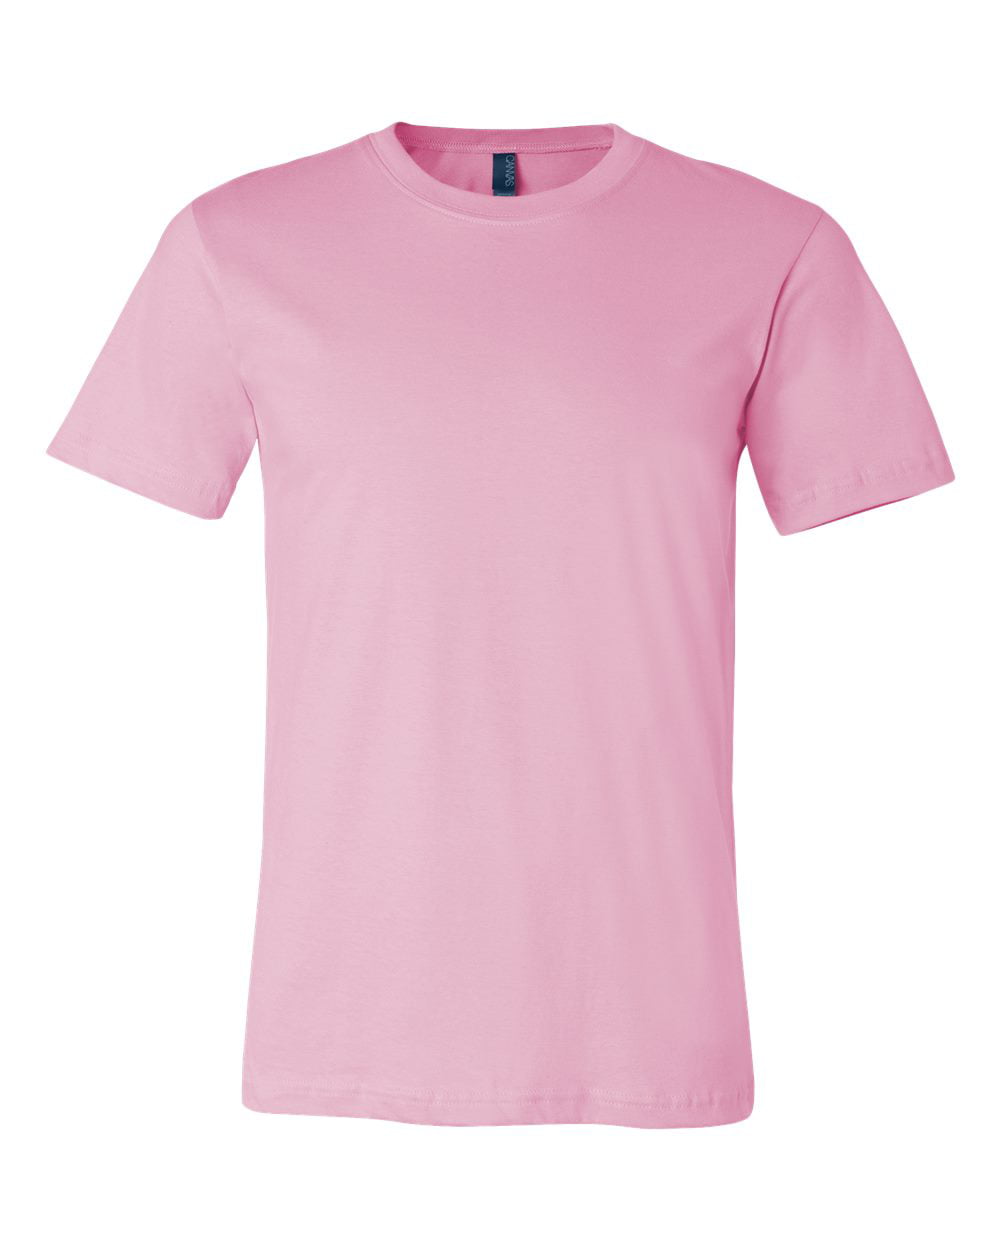 3001 Unisex Jersey T-Shirt - Pink - 4X-Large - Walmart.com